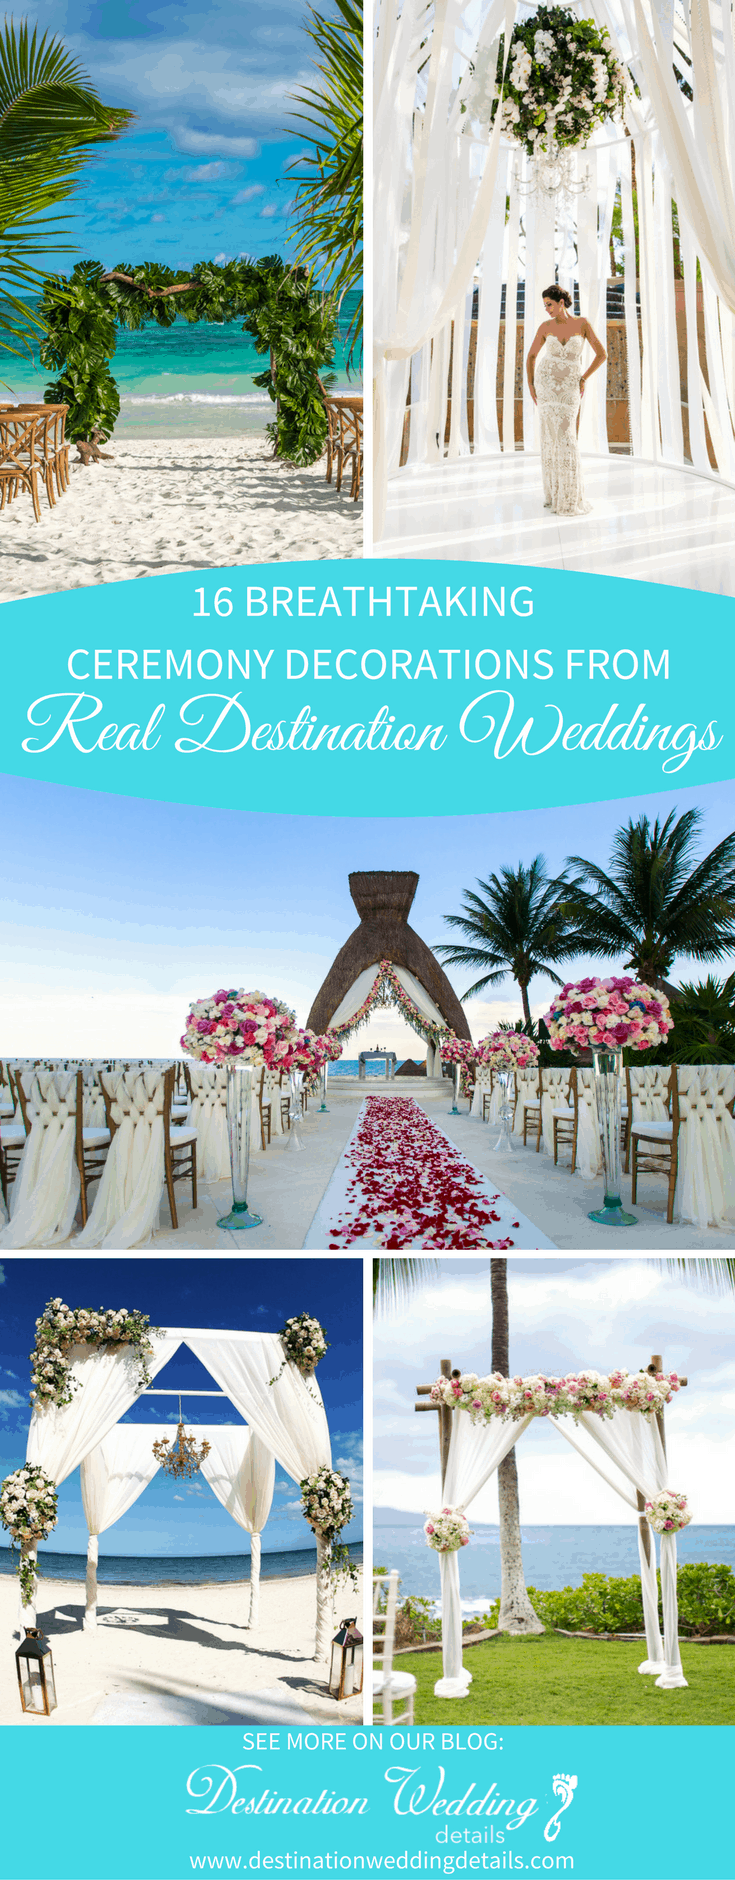 real destination wedding ceremony decorations